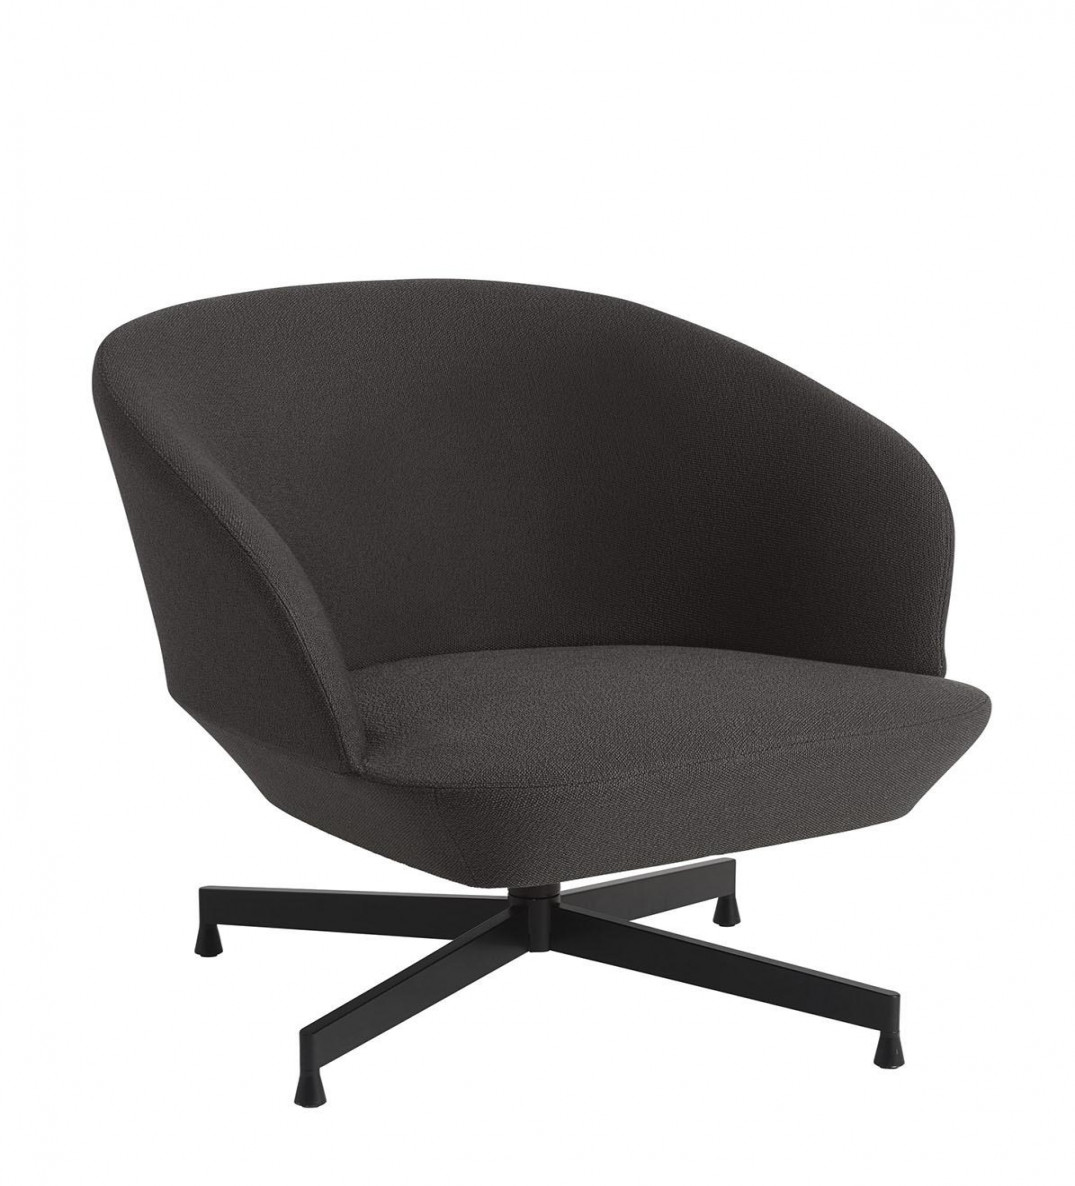 Sessel Lounge Chair Oslo Swivel Base twill weave/black von Muuto